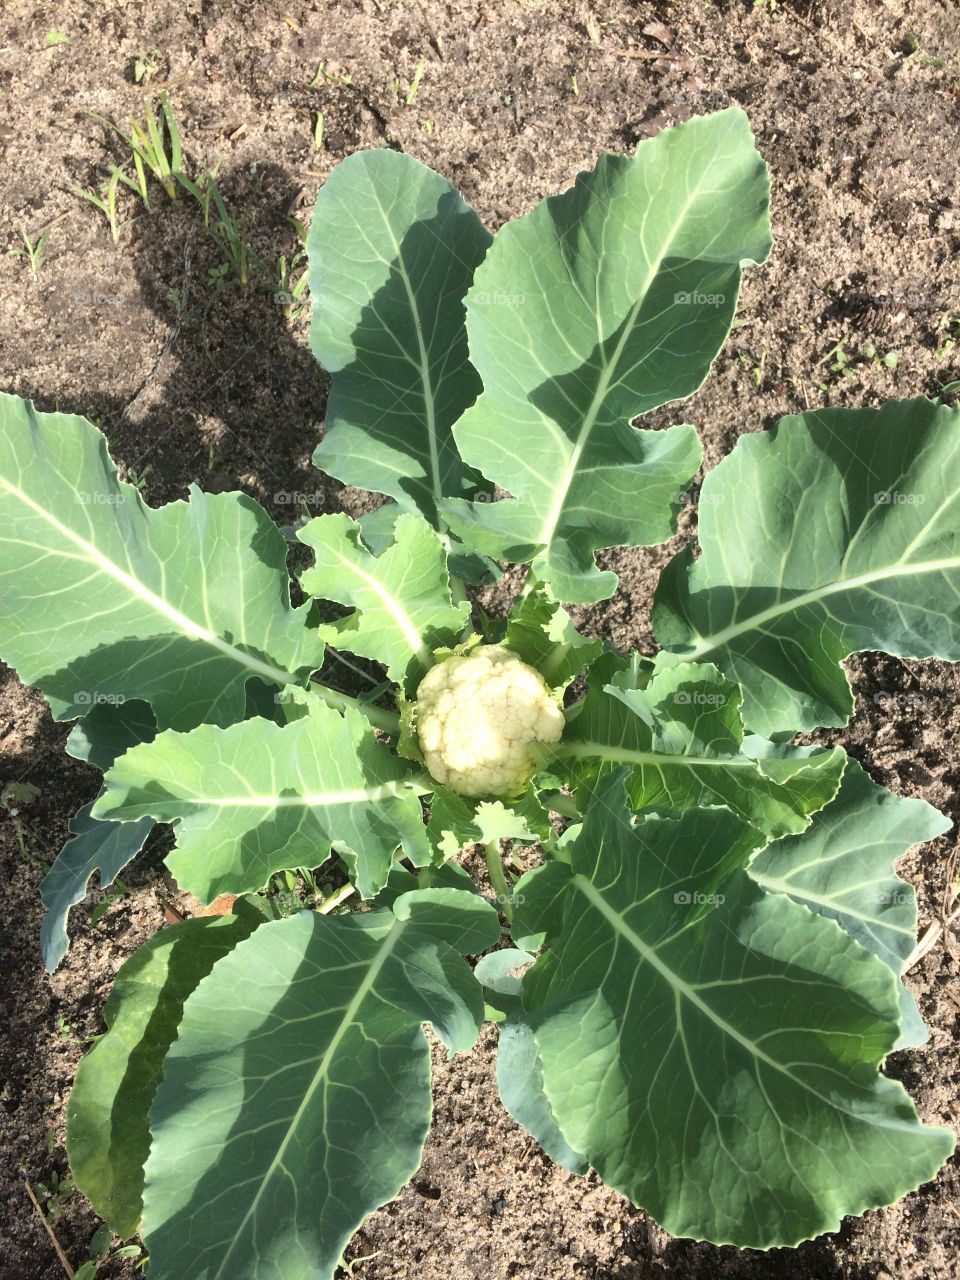 Cauliflower planted 